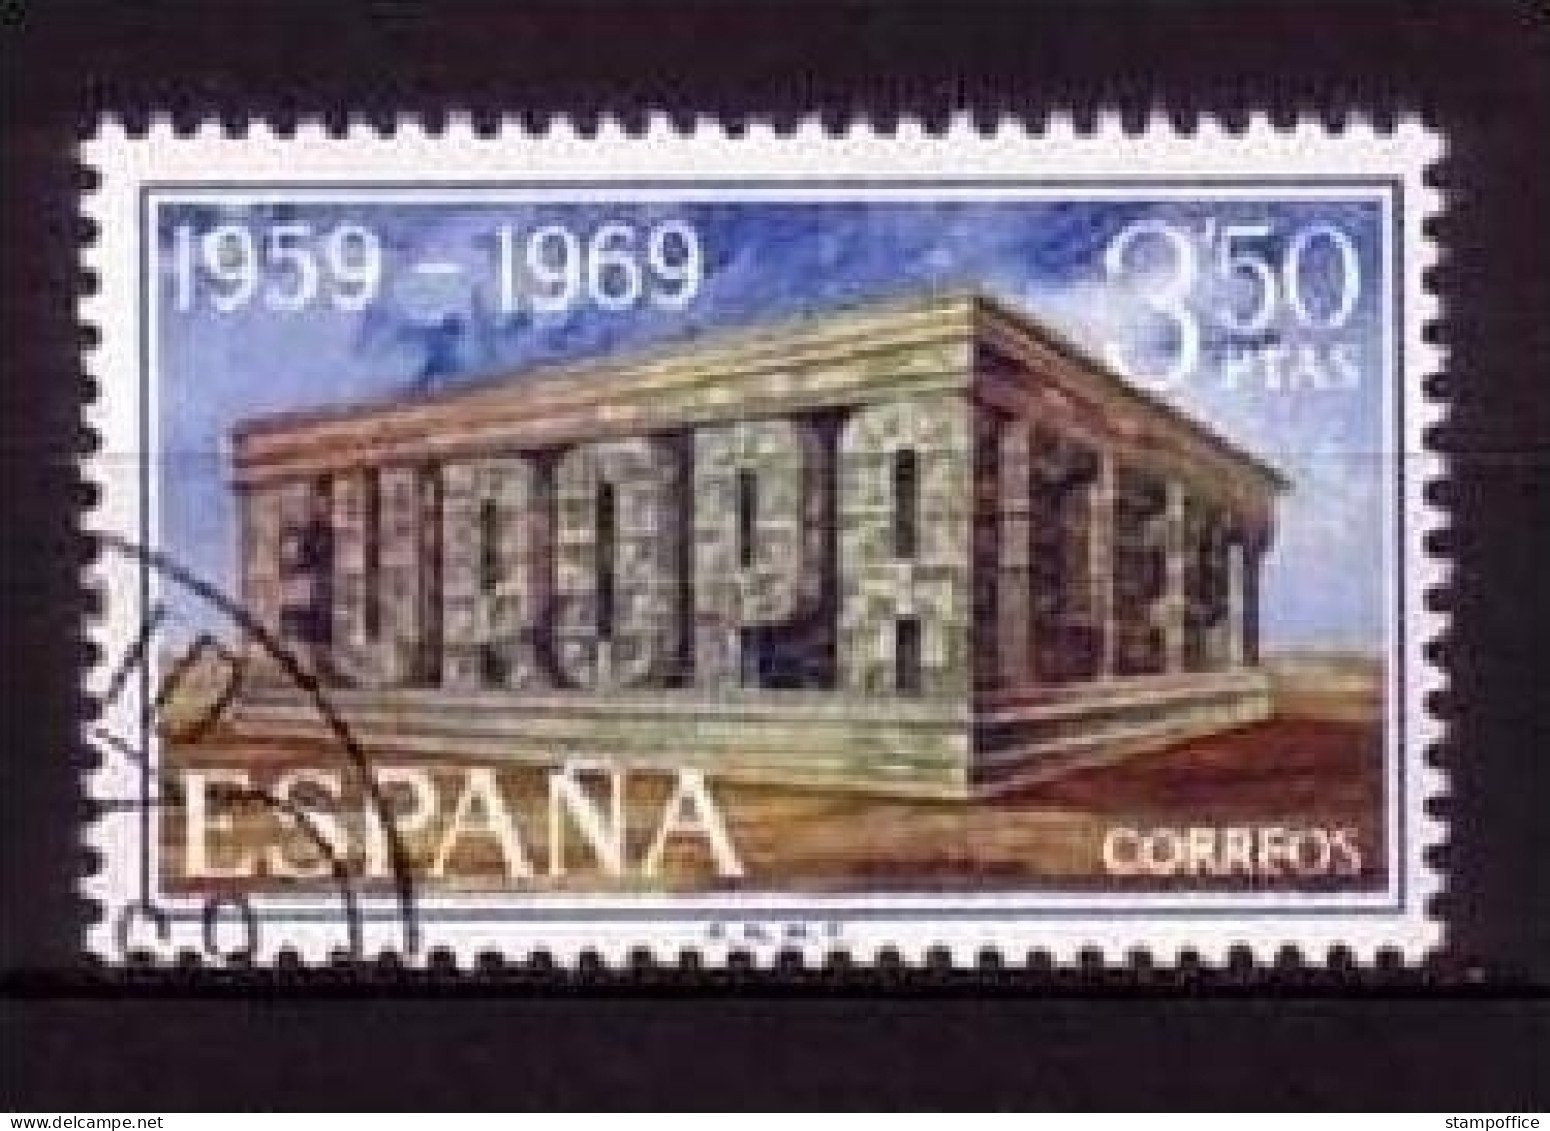 SPANIEN MI-NR. 1808 O EUROPA 1969 - EUROPA CEPT - 1969